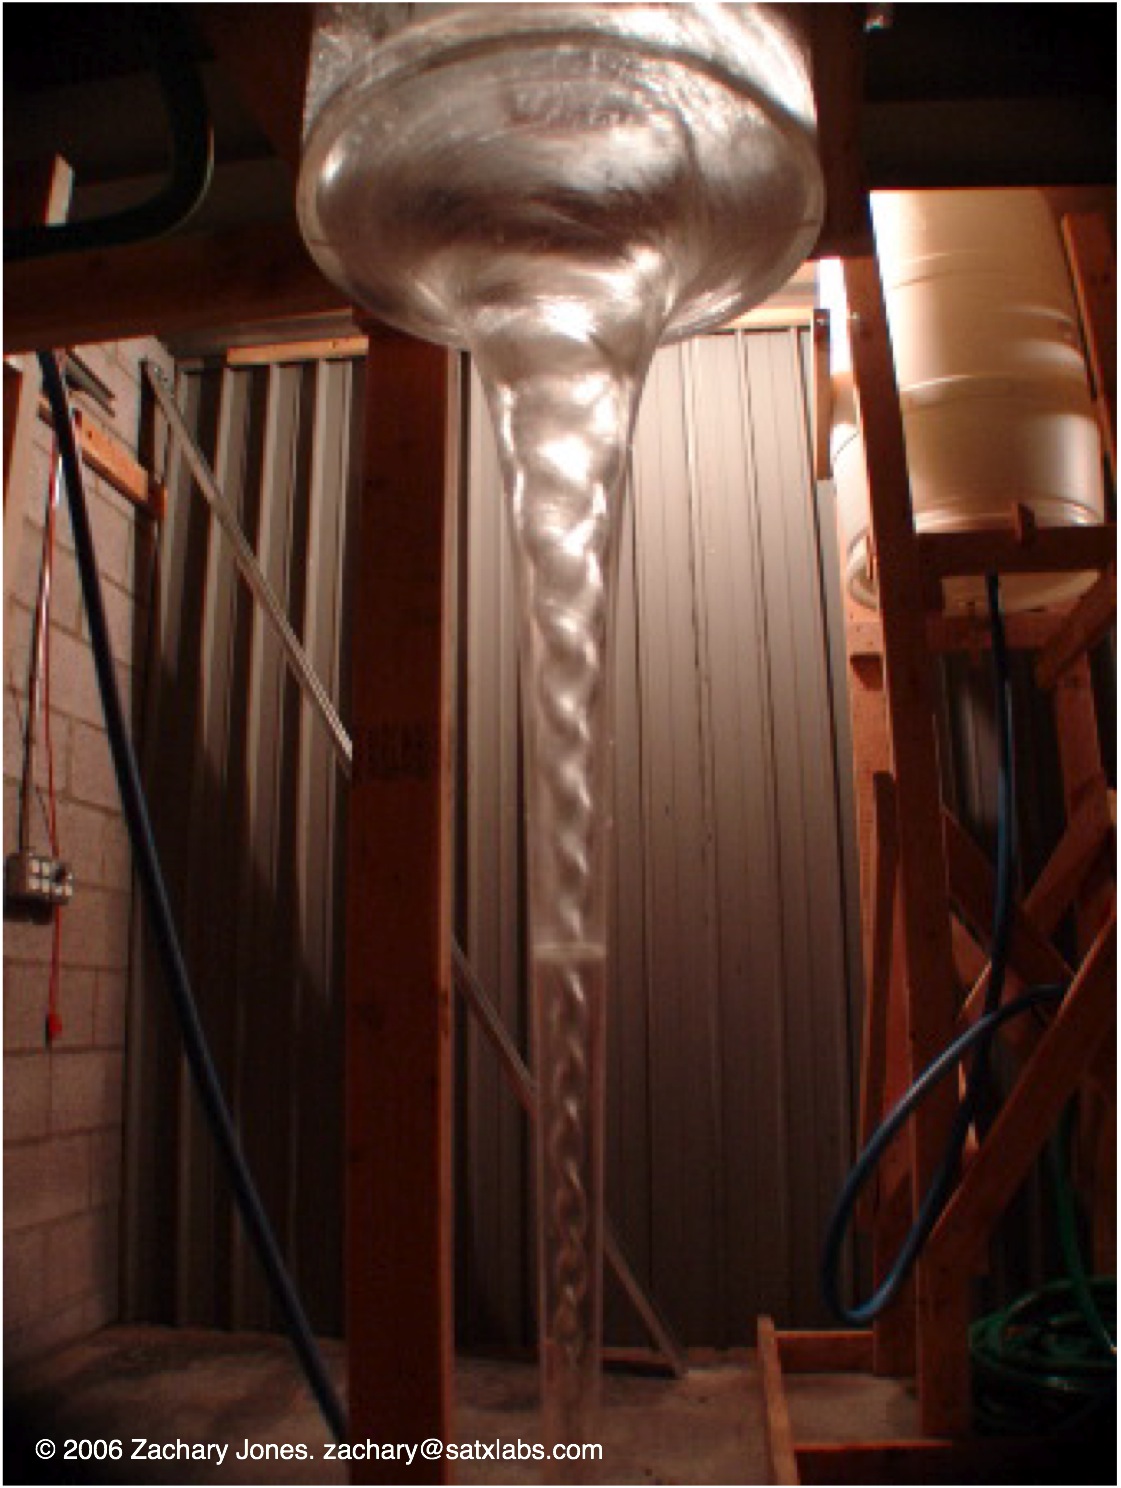 a phi vortex water flow, showing DNA-like spiral braiding